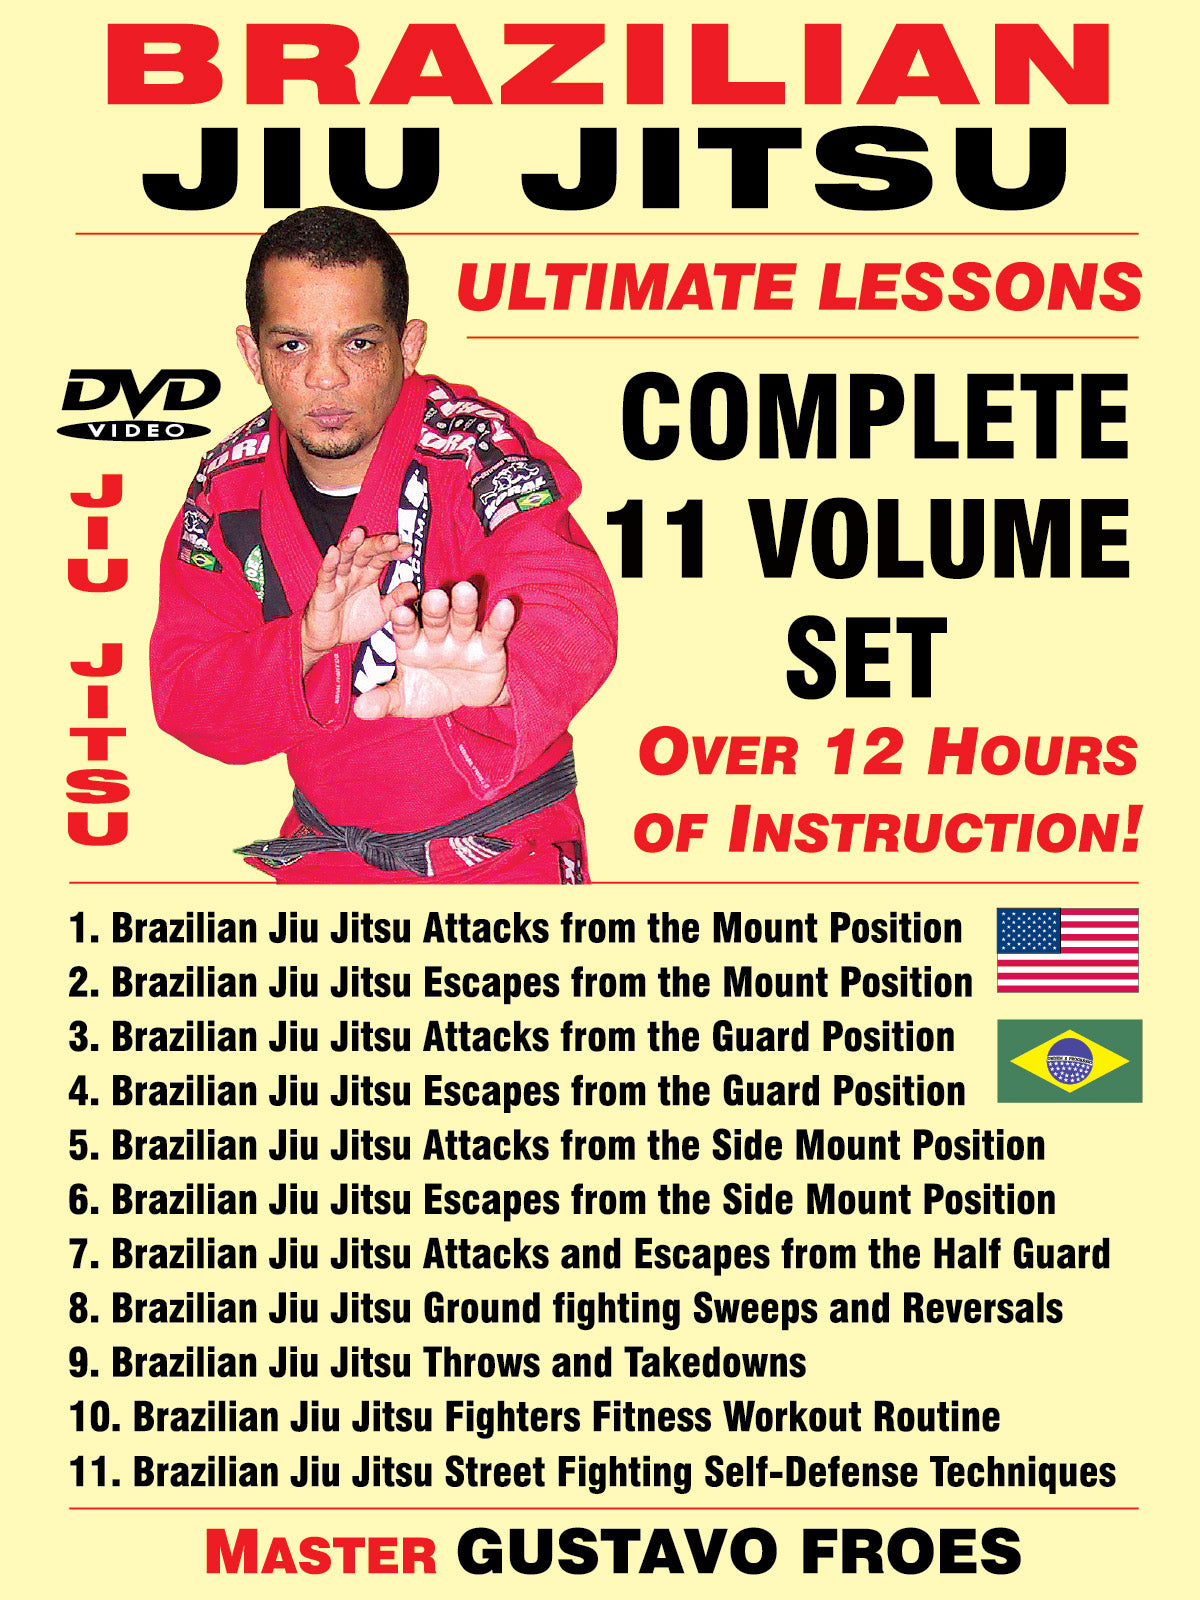 Serie completa de BJJ Ultimate Lessons de Gustavo Froes (On Demand)